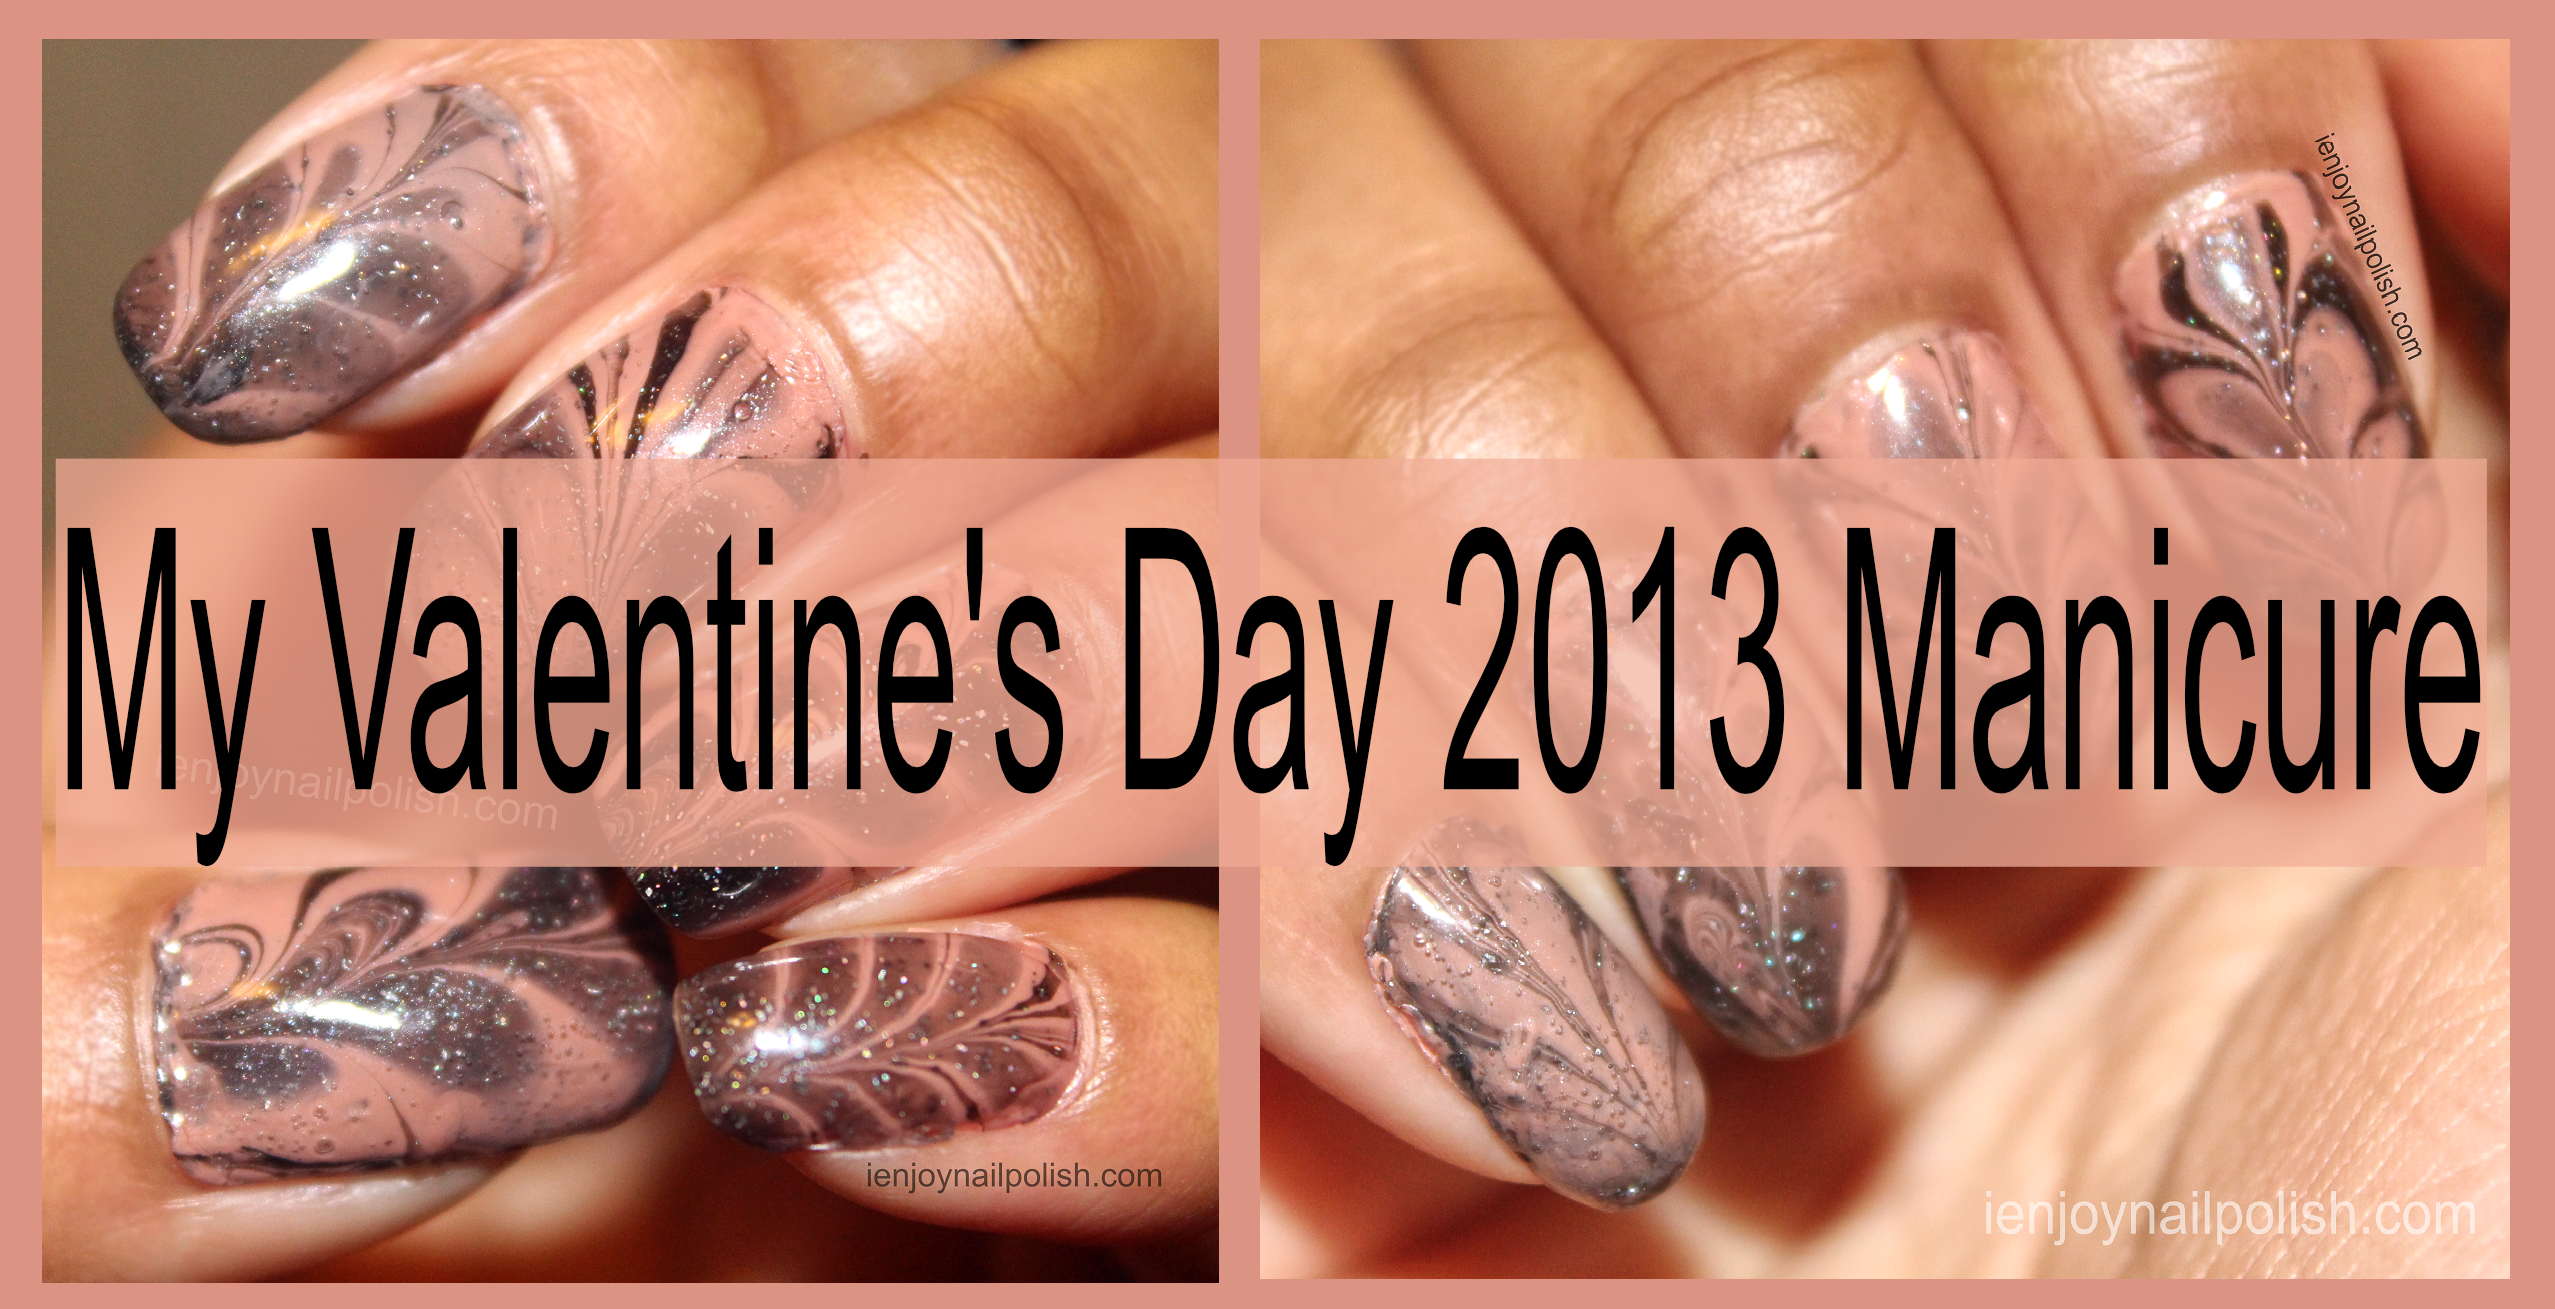 My Valentine’s Day 2013 Manicure